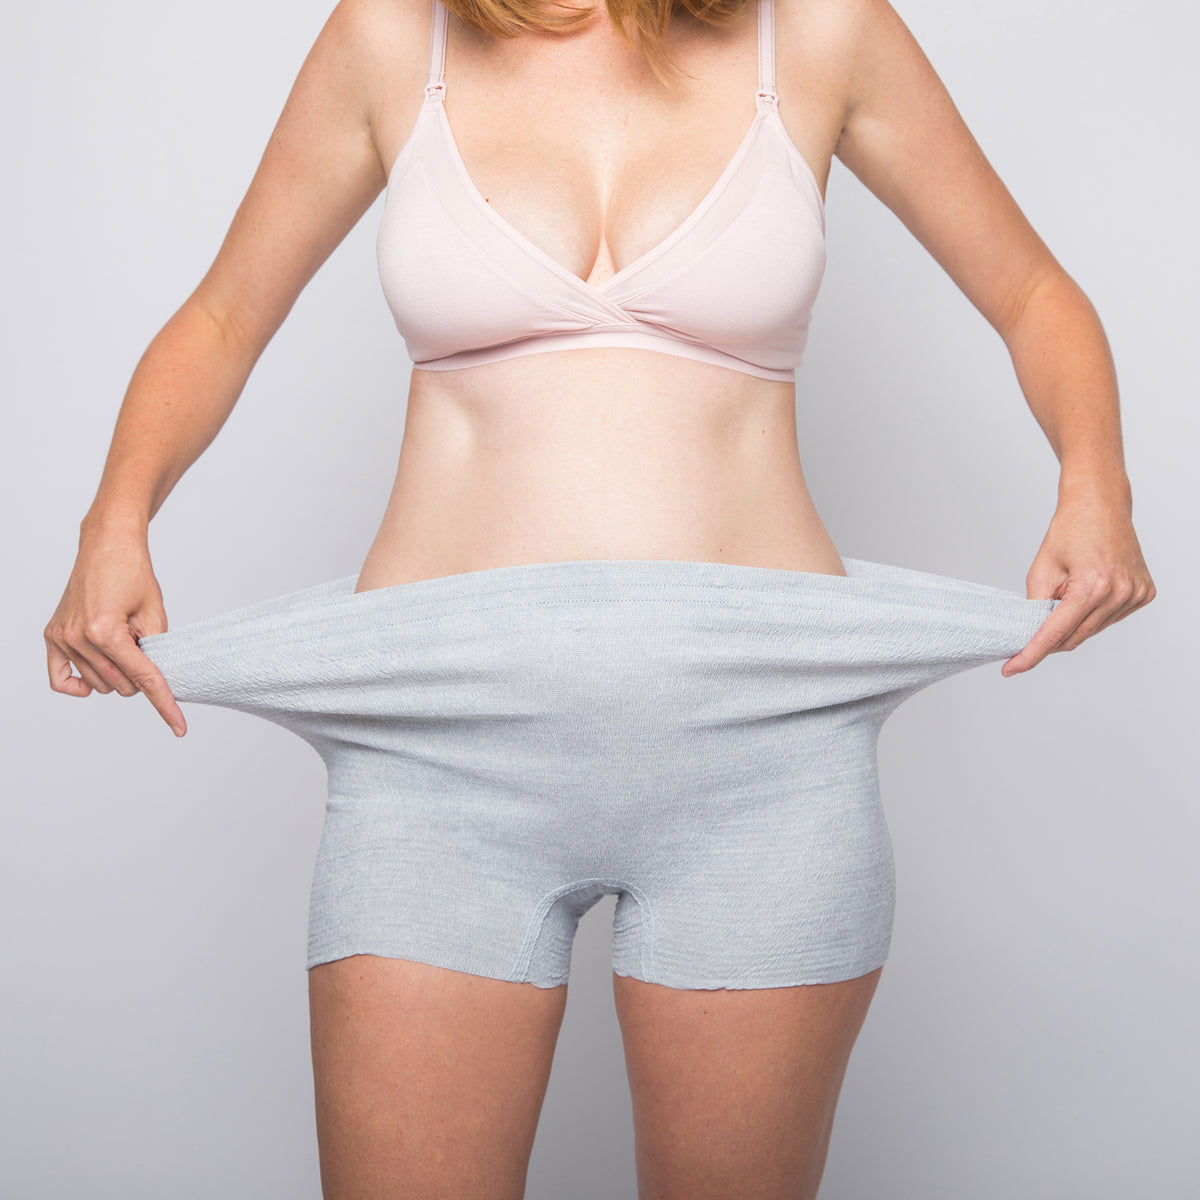 Buy frida mom Boyshort Disposable Postpartum Underwear Regular at